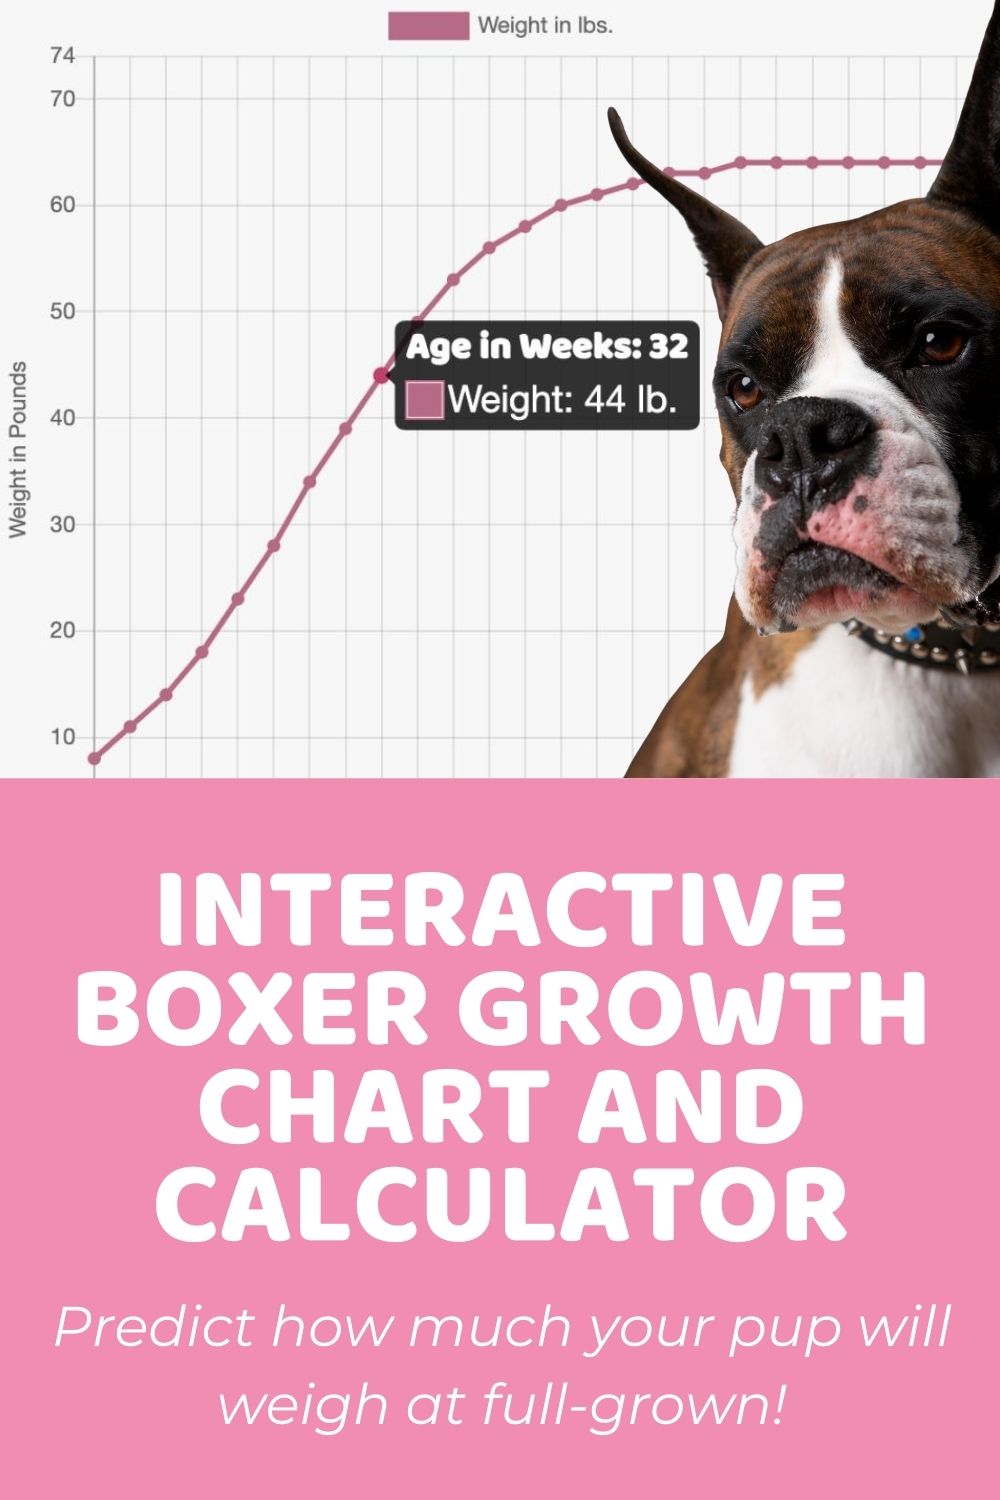 puppy adult weight calculator